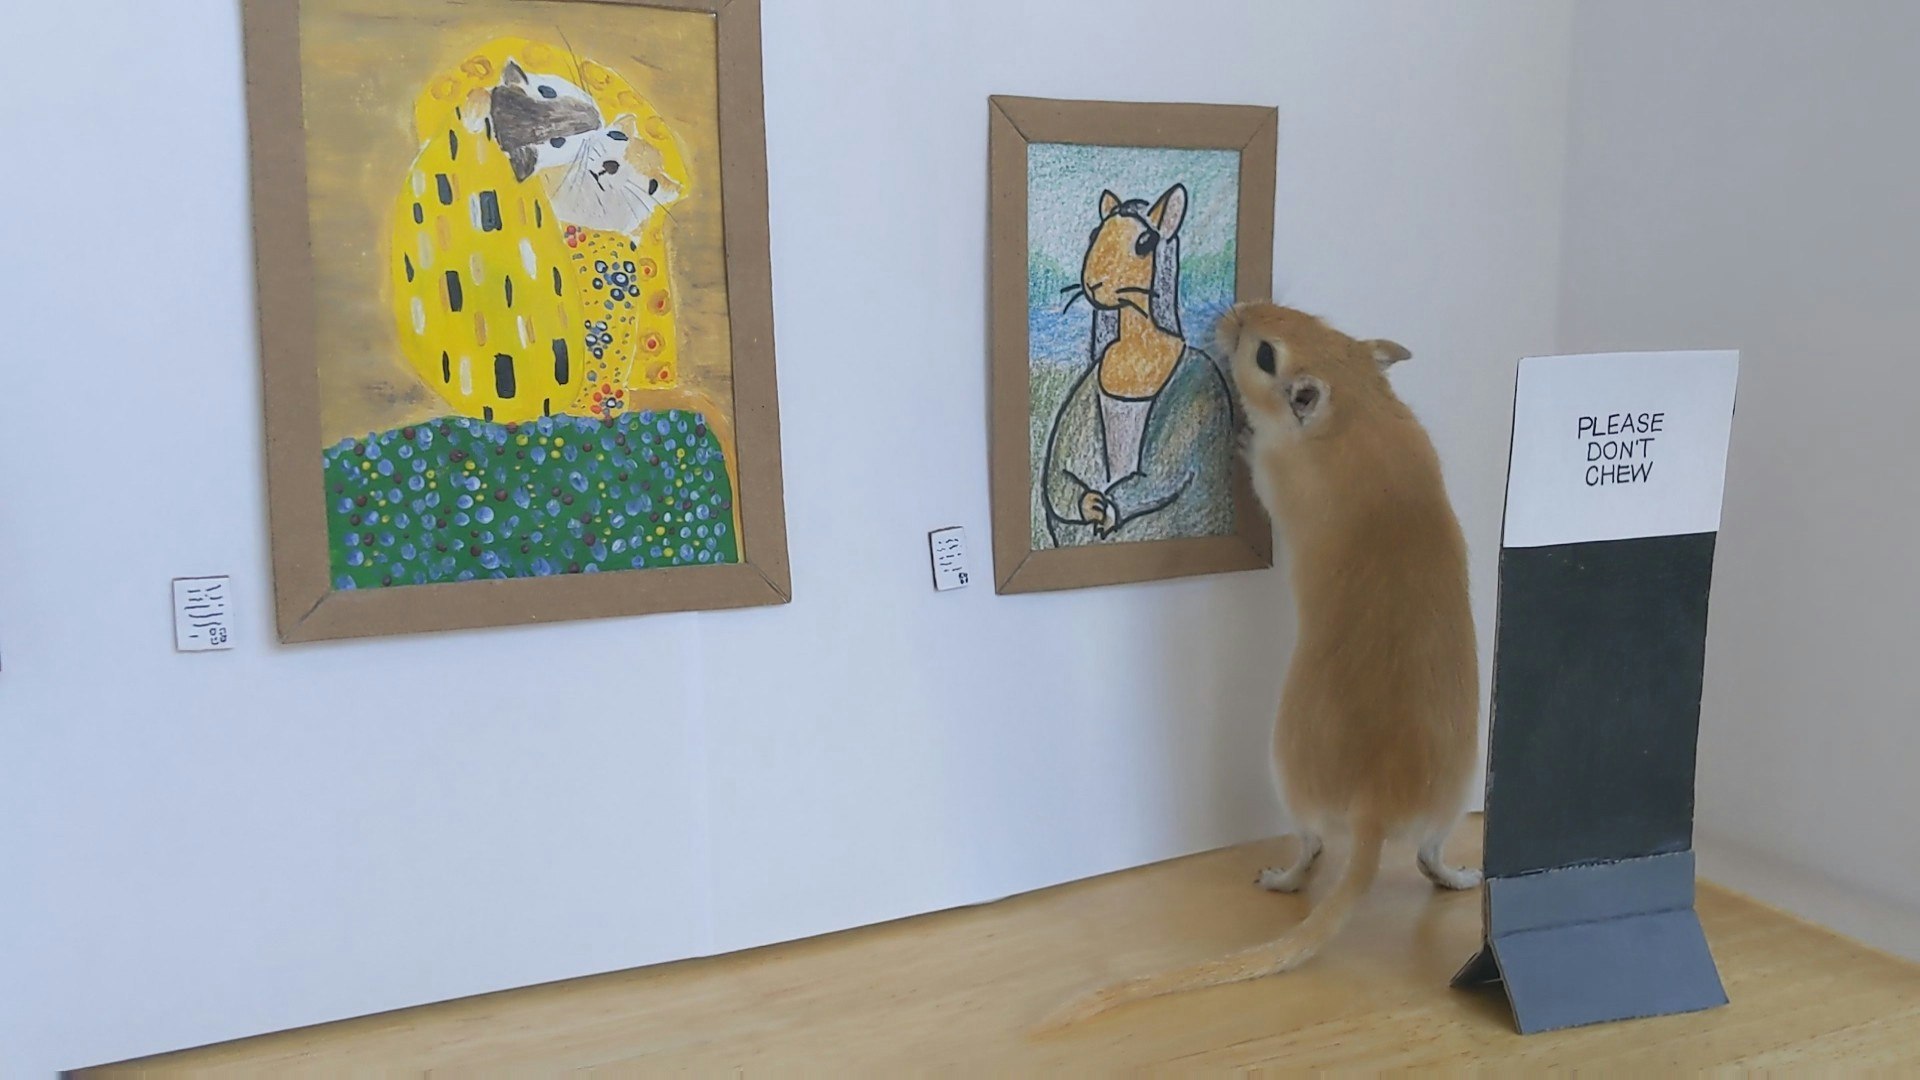 A gerbil examining a cartoon artwork on the wall